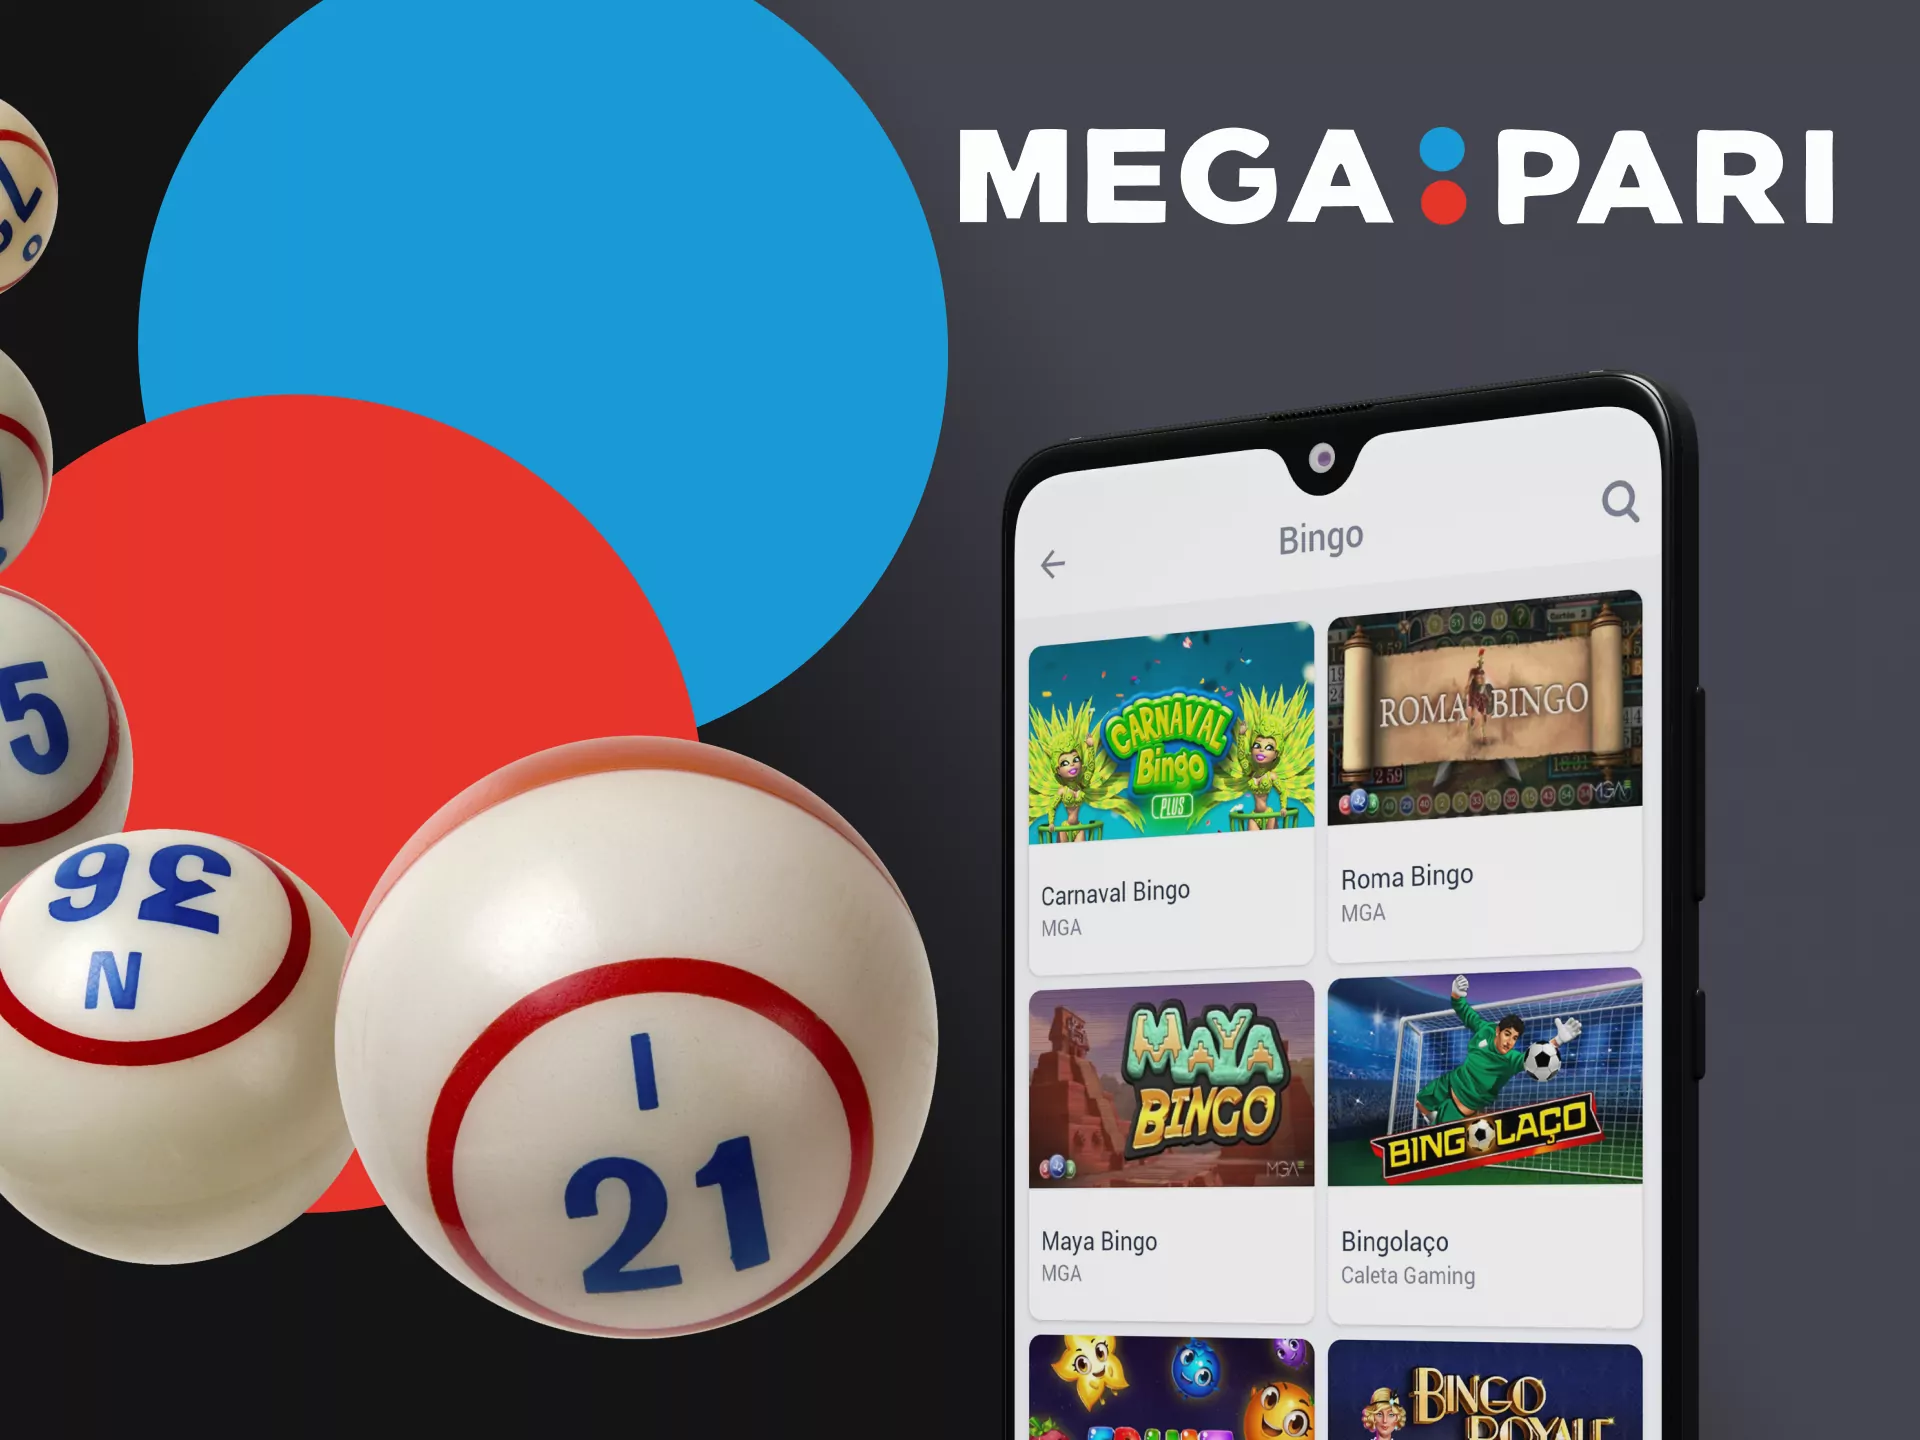 Play bingo with the Megapari Android app.